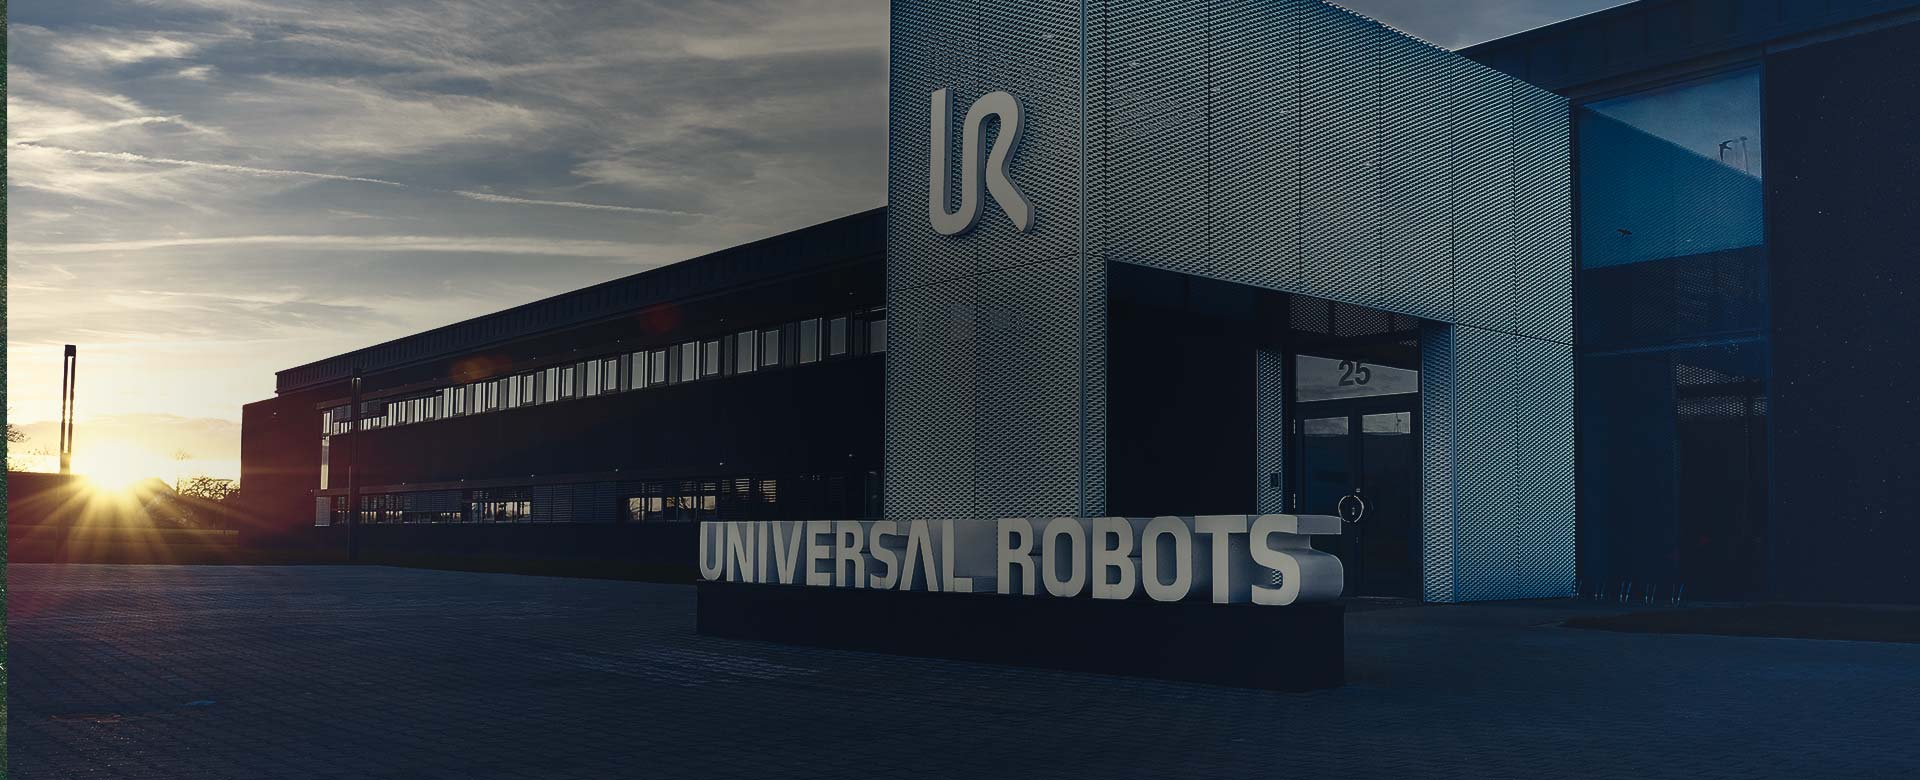 about-universal-robots.jpg